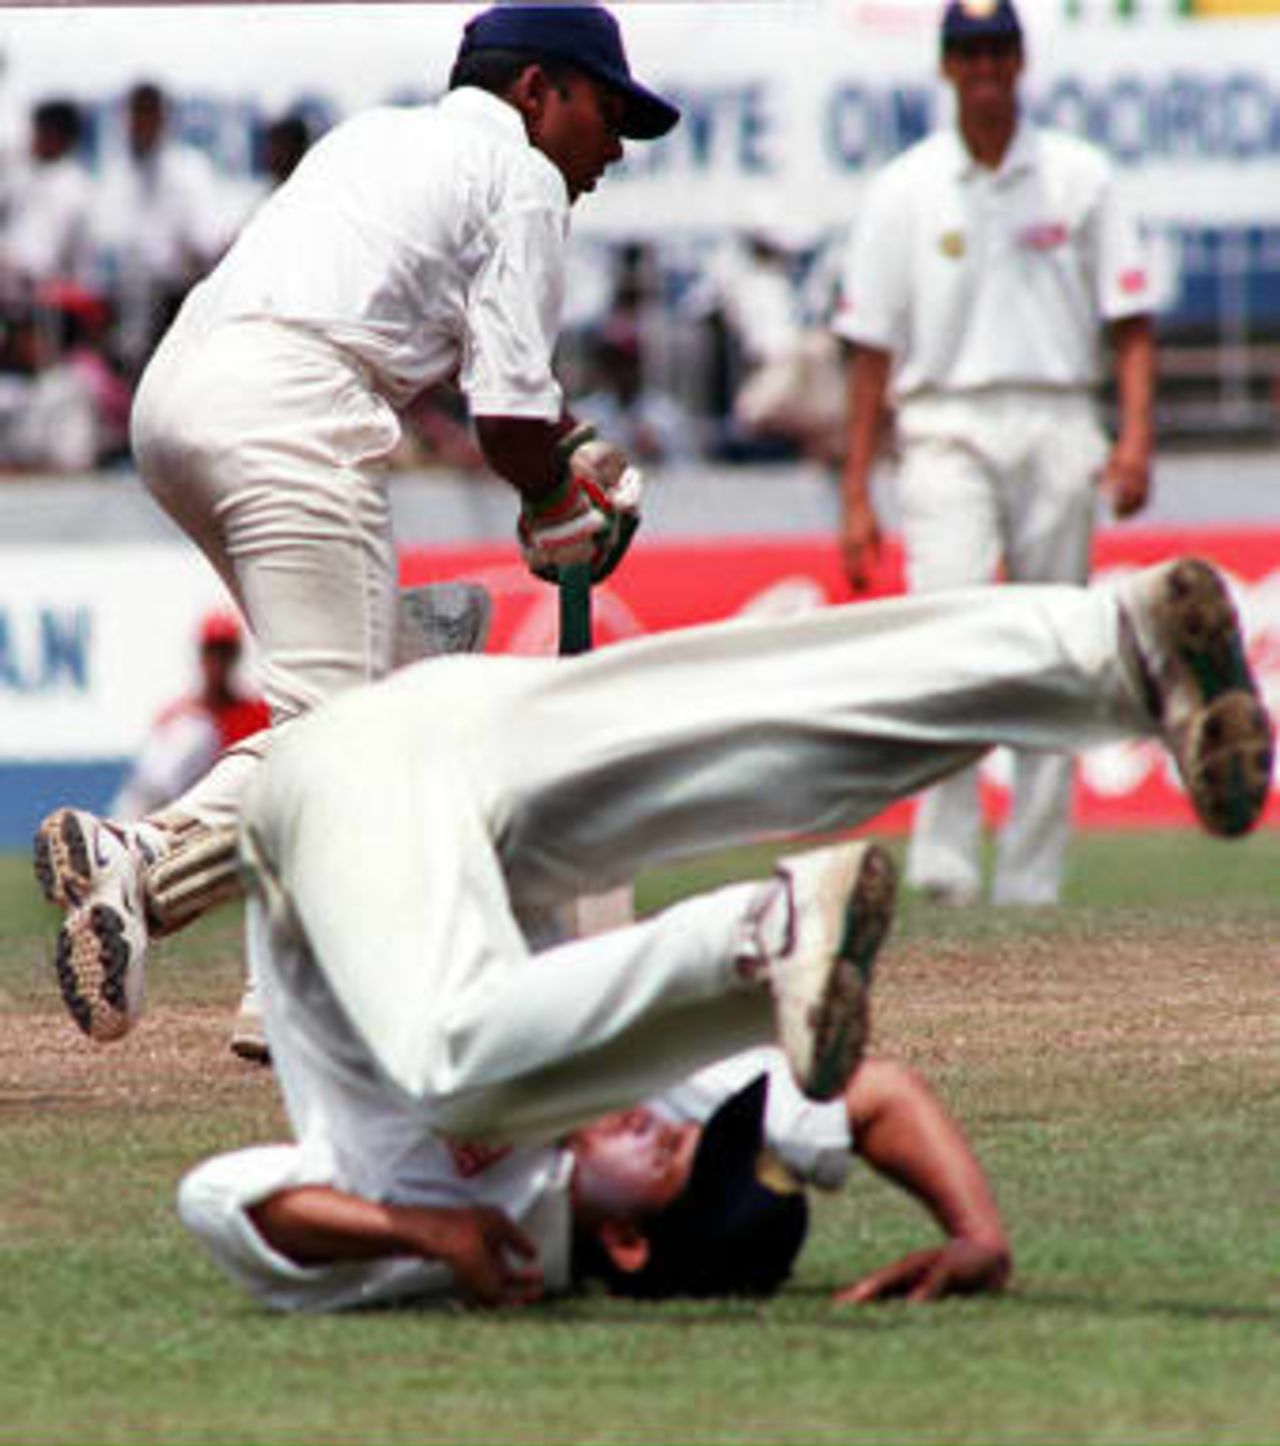 Ganguly drops Jayawardene - Asian Test Championship, 1998/99, 2nd Match Sri Lanka v India Sinhalese Sports Club, Colombo 27 Feb 1999